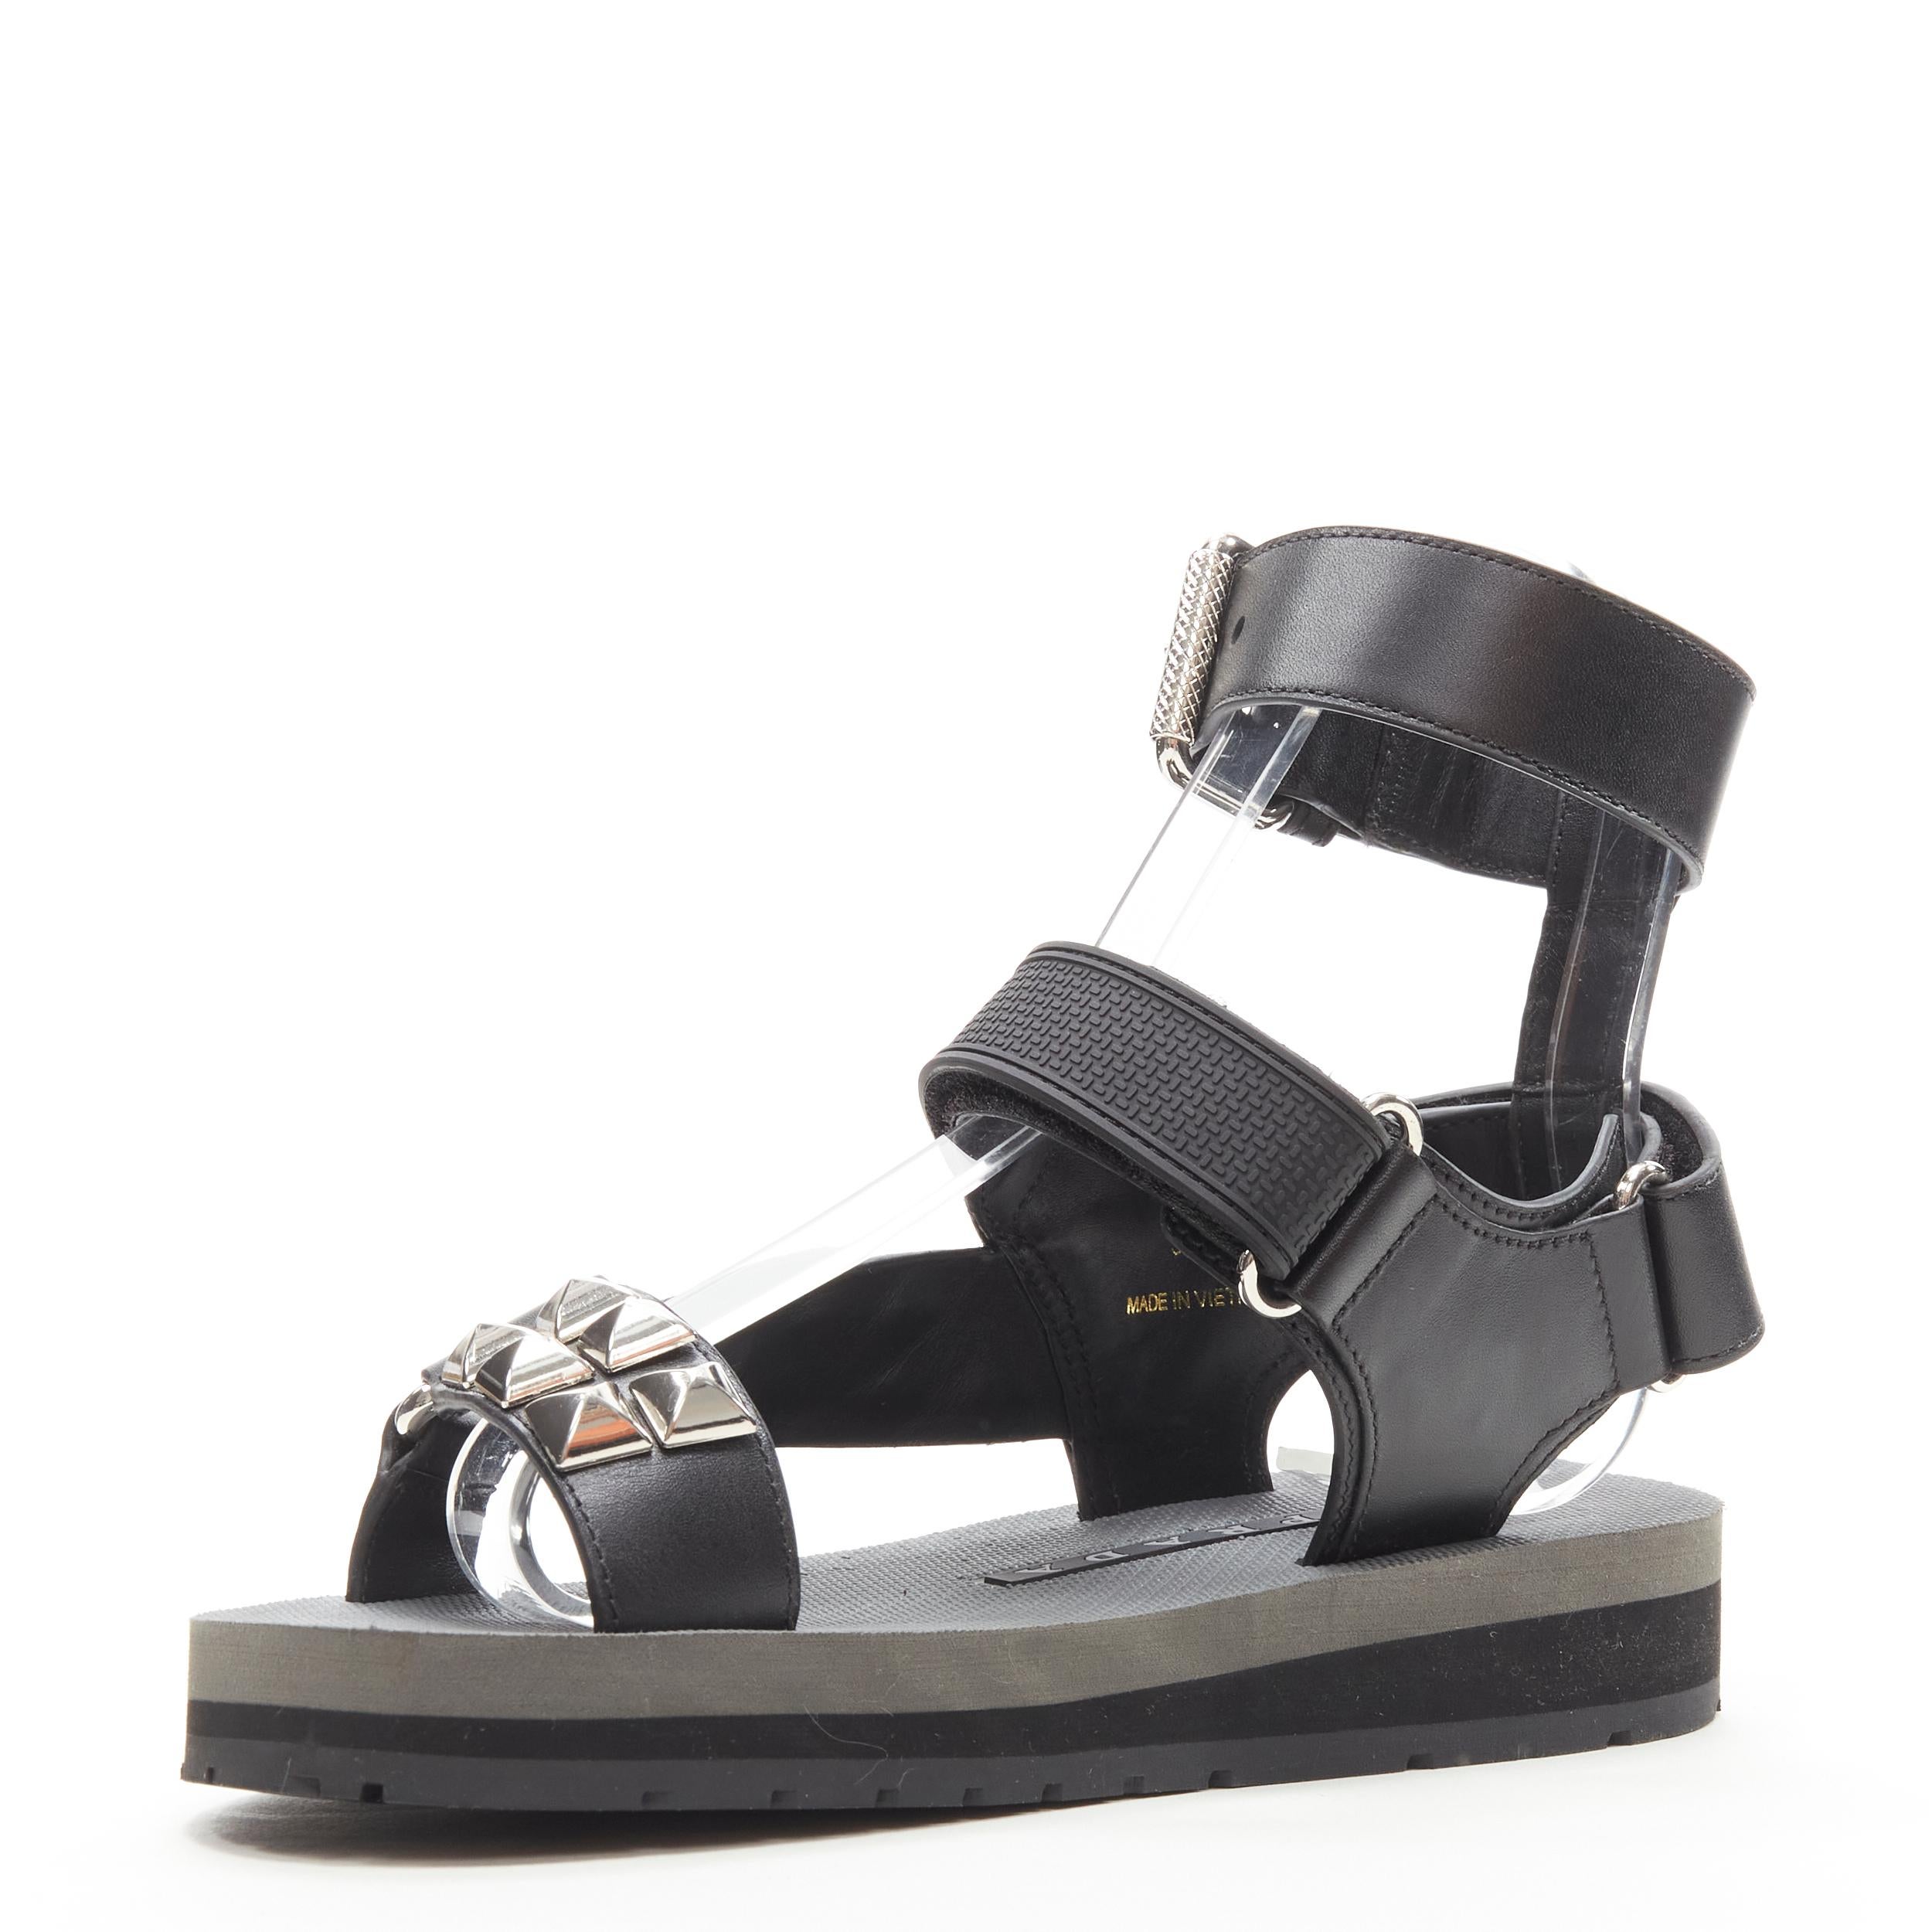 PRADA noir argent punk stud embellis sports strap gladiator sandales EU36 Excellent état - En vente à Hong Kong, NT